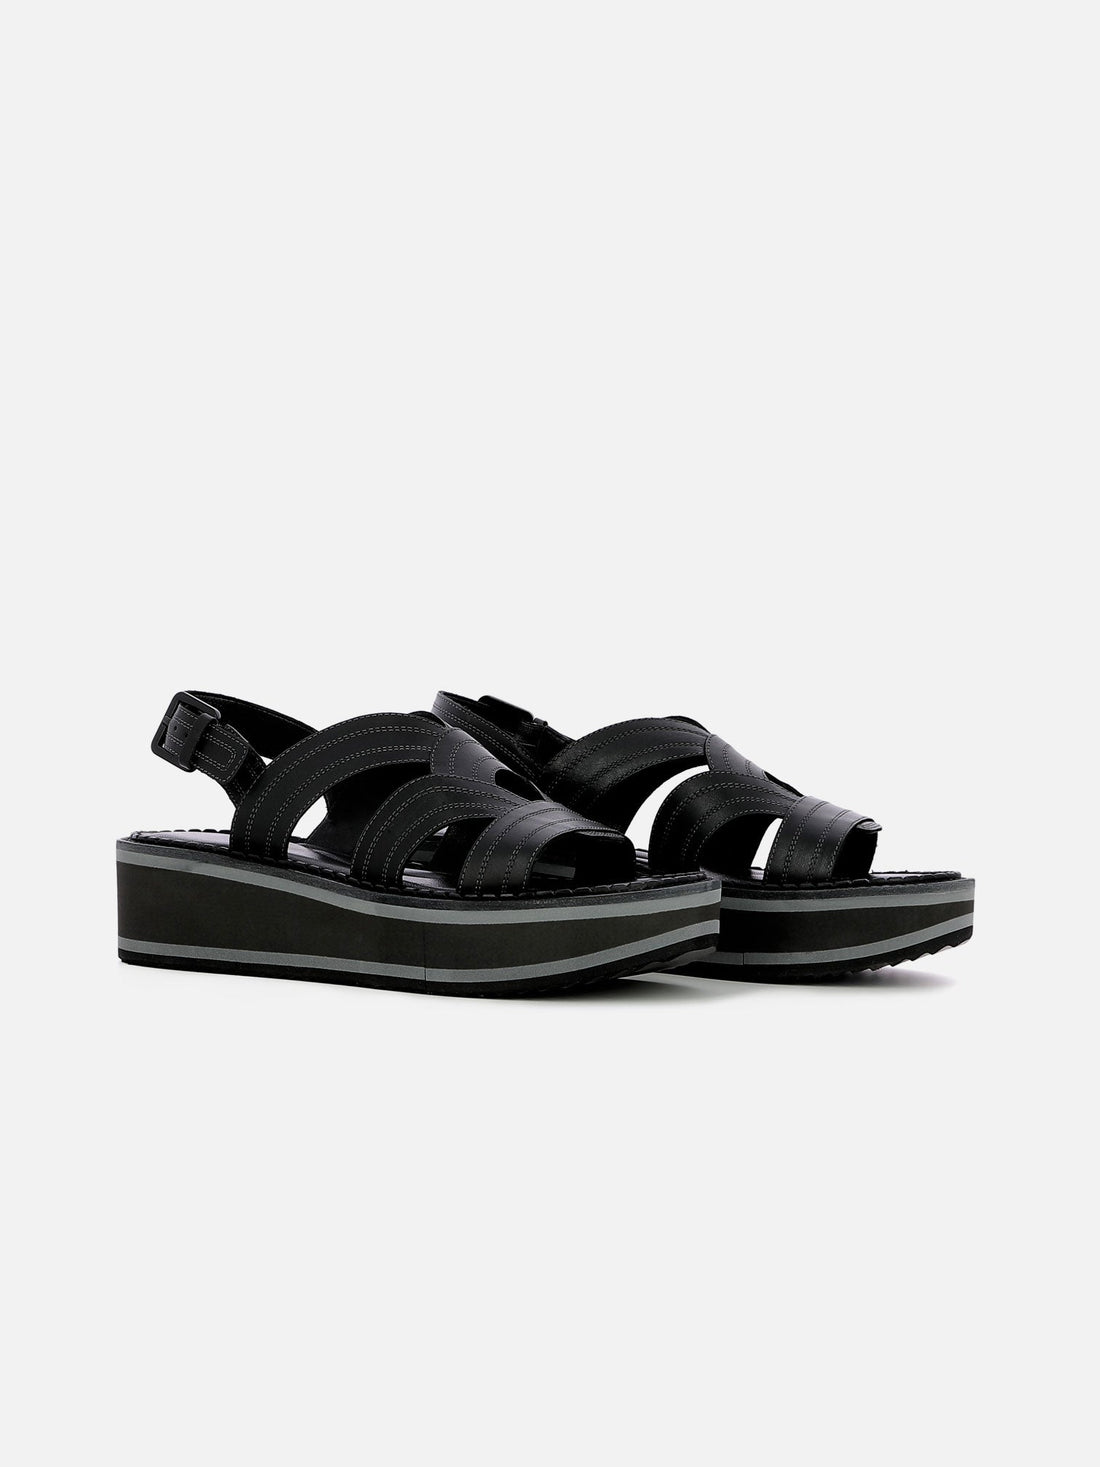 SANDALS - FRESIA sandals, calfskin black - 3606063965019 - Clergerie Paris - Europe